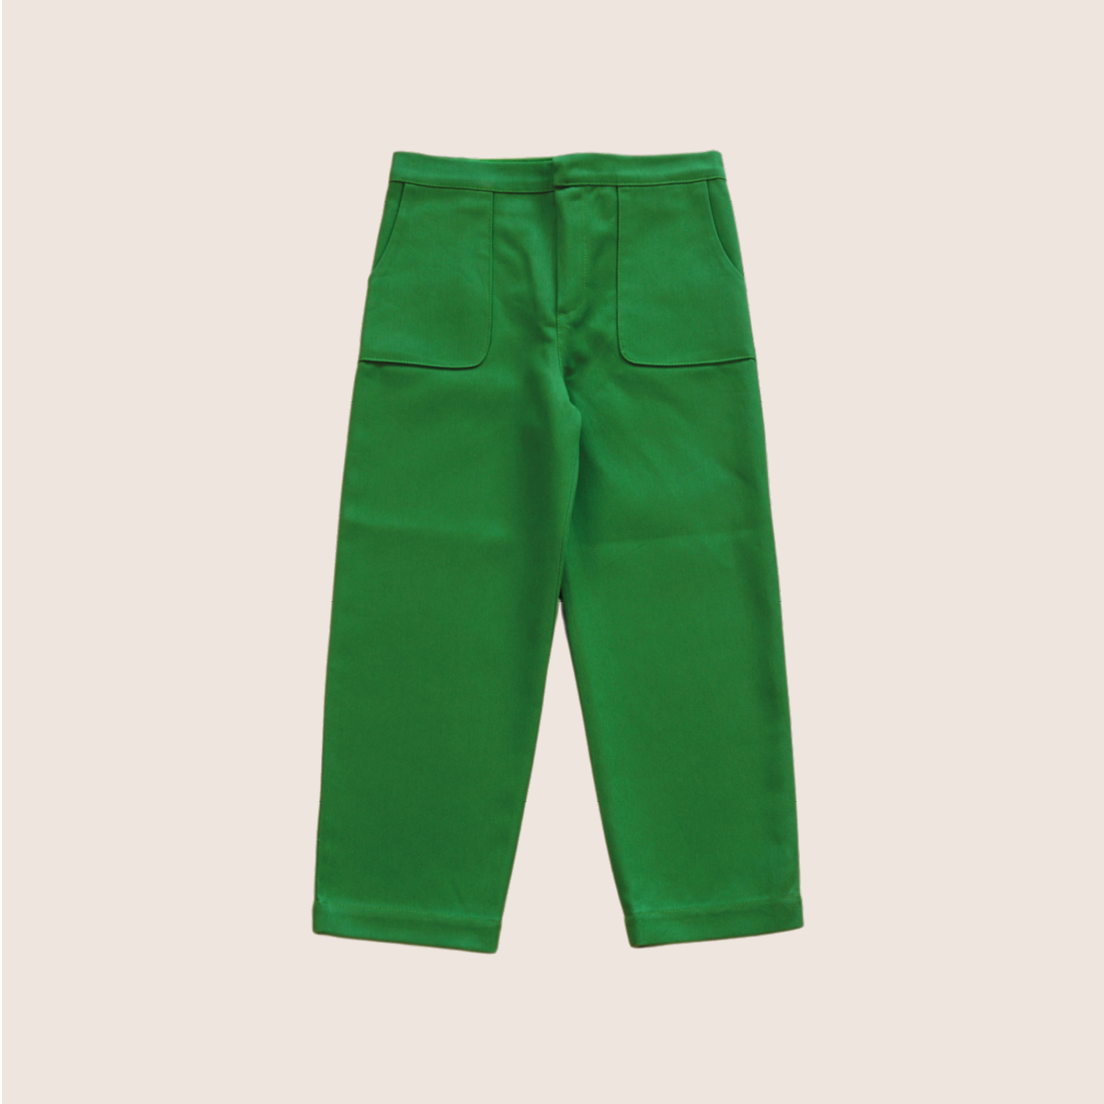 Pantalon (taille réglable)